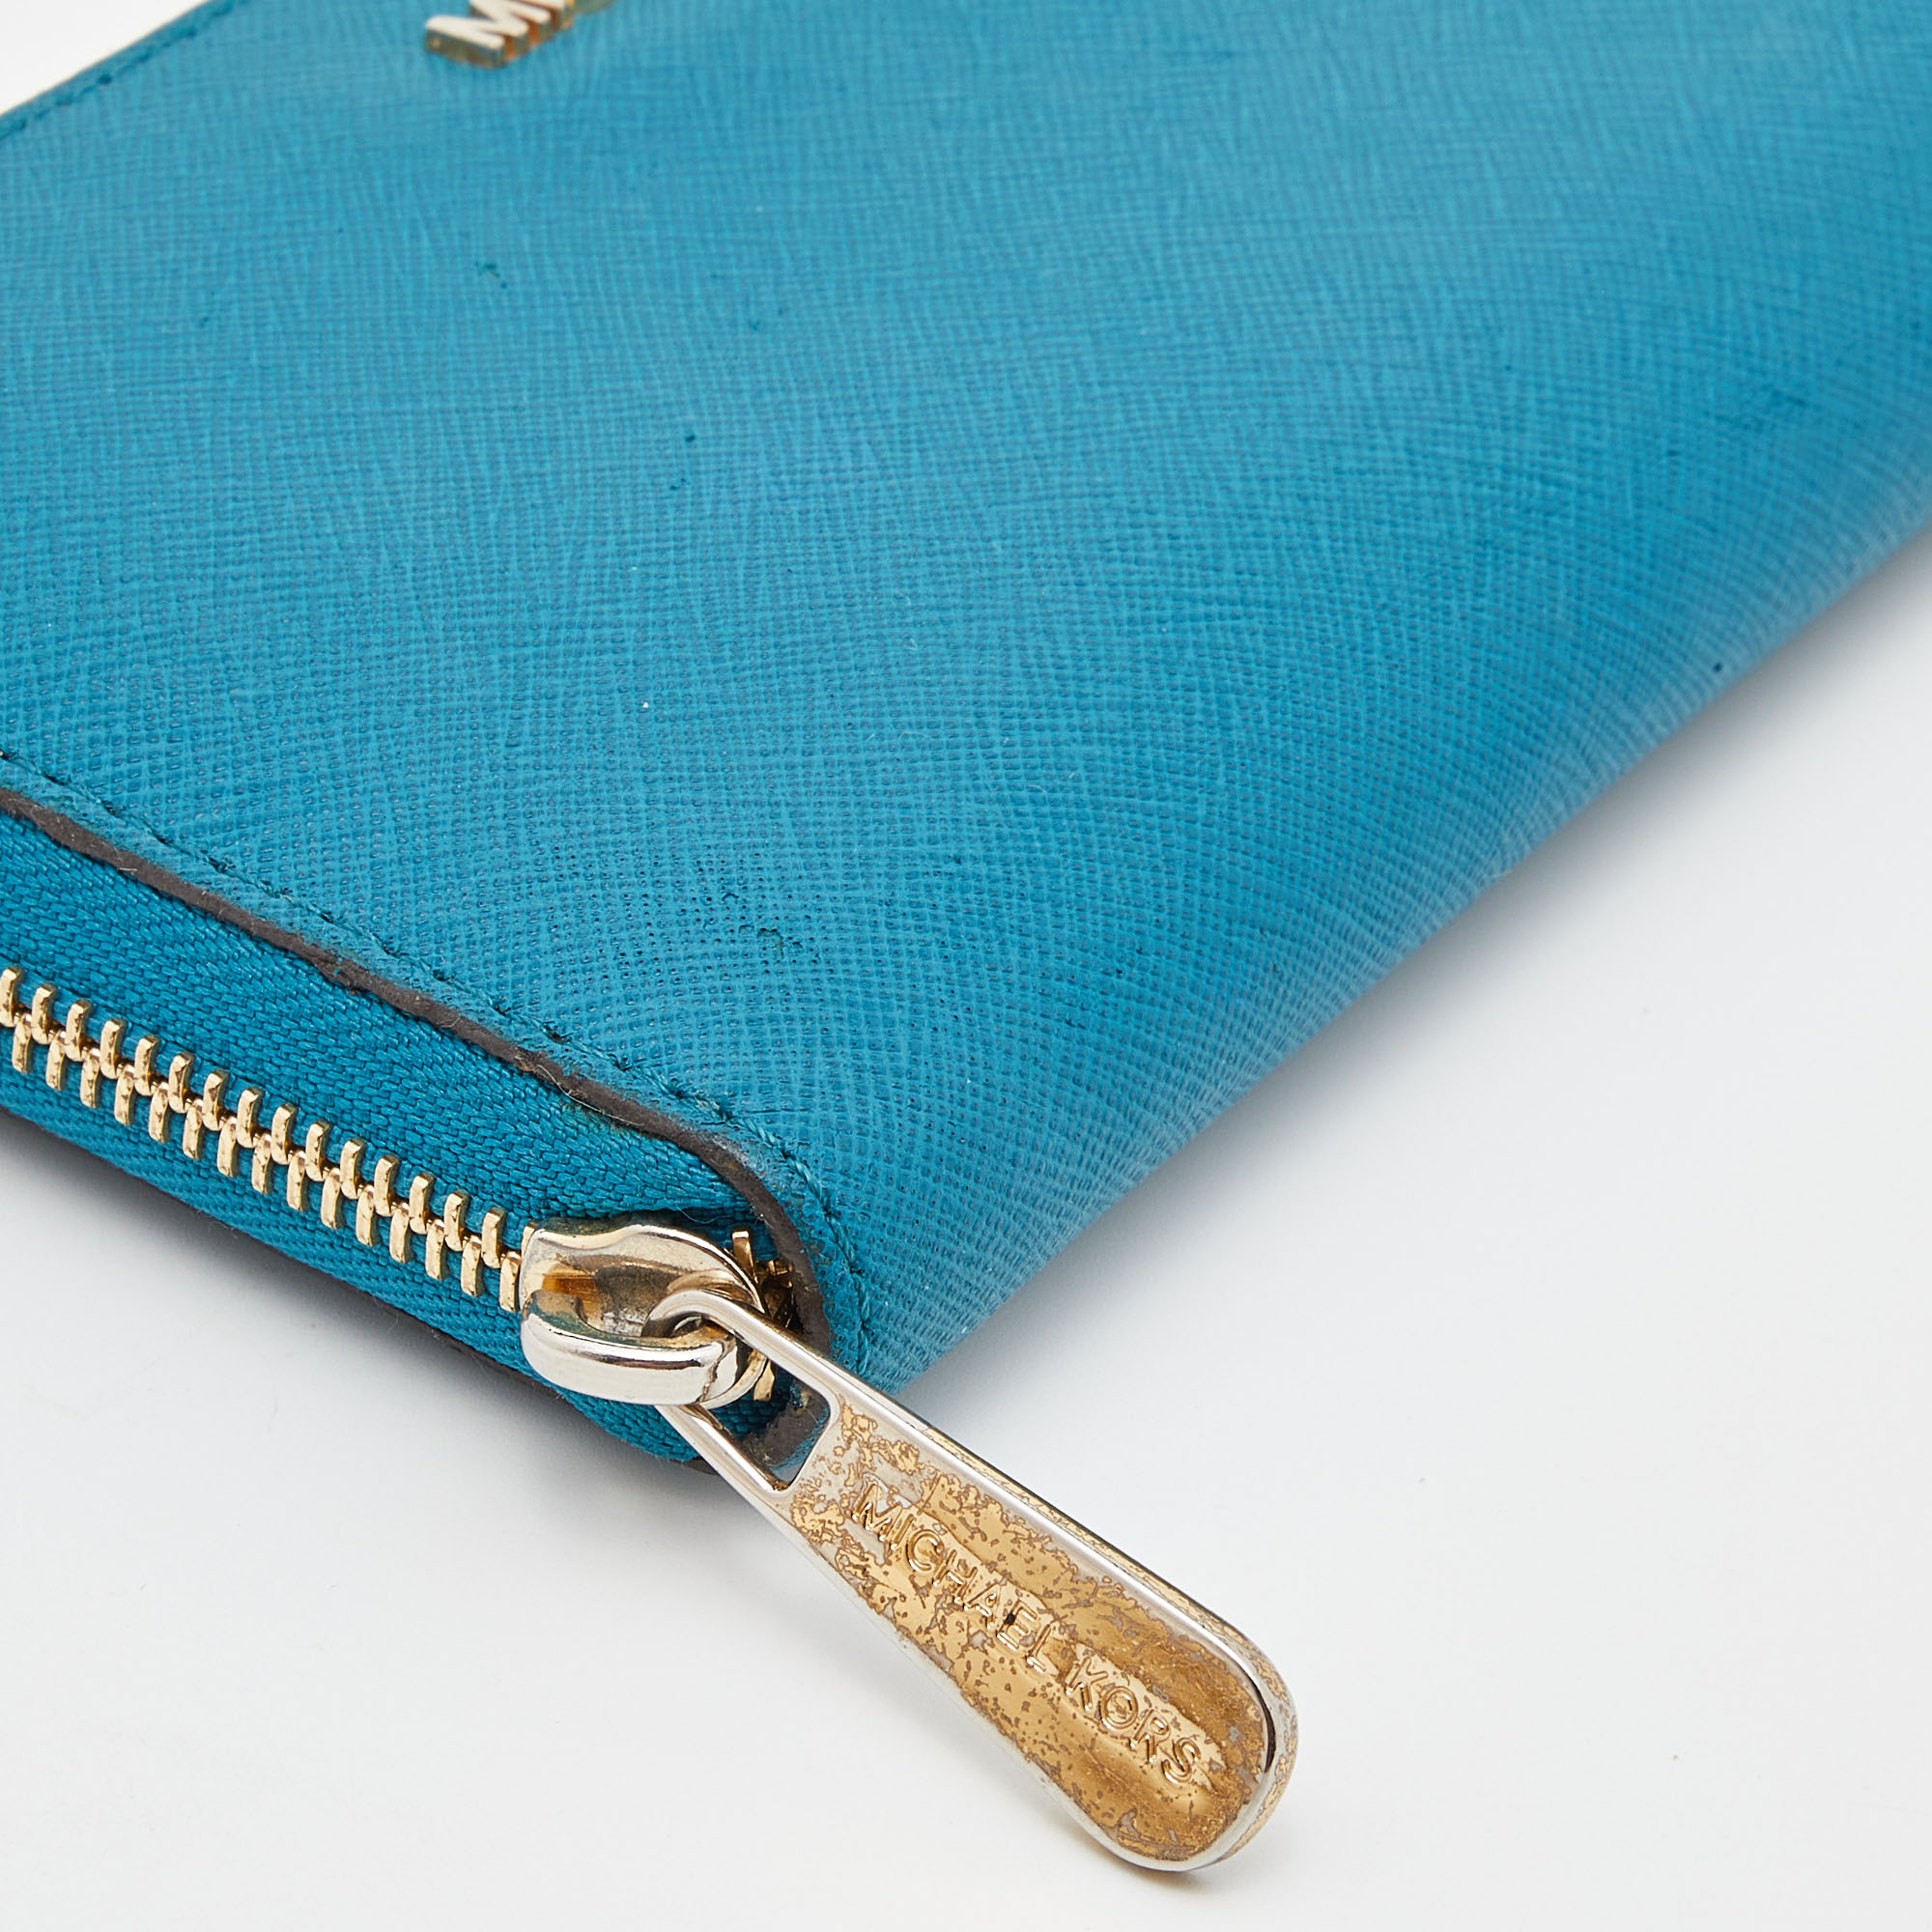 Michael Kors Blue Leather Jet Set Zip Around Wallet